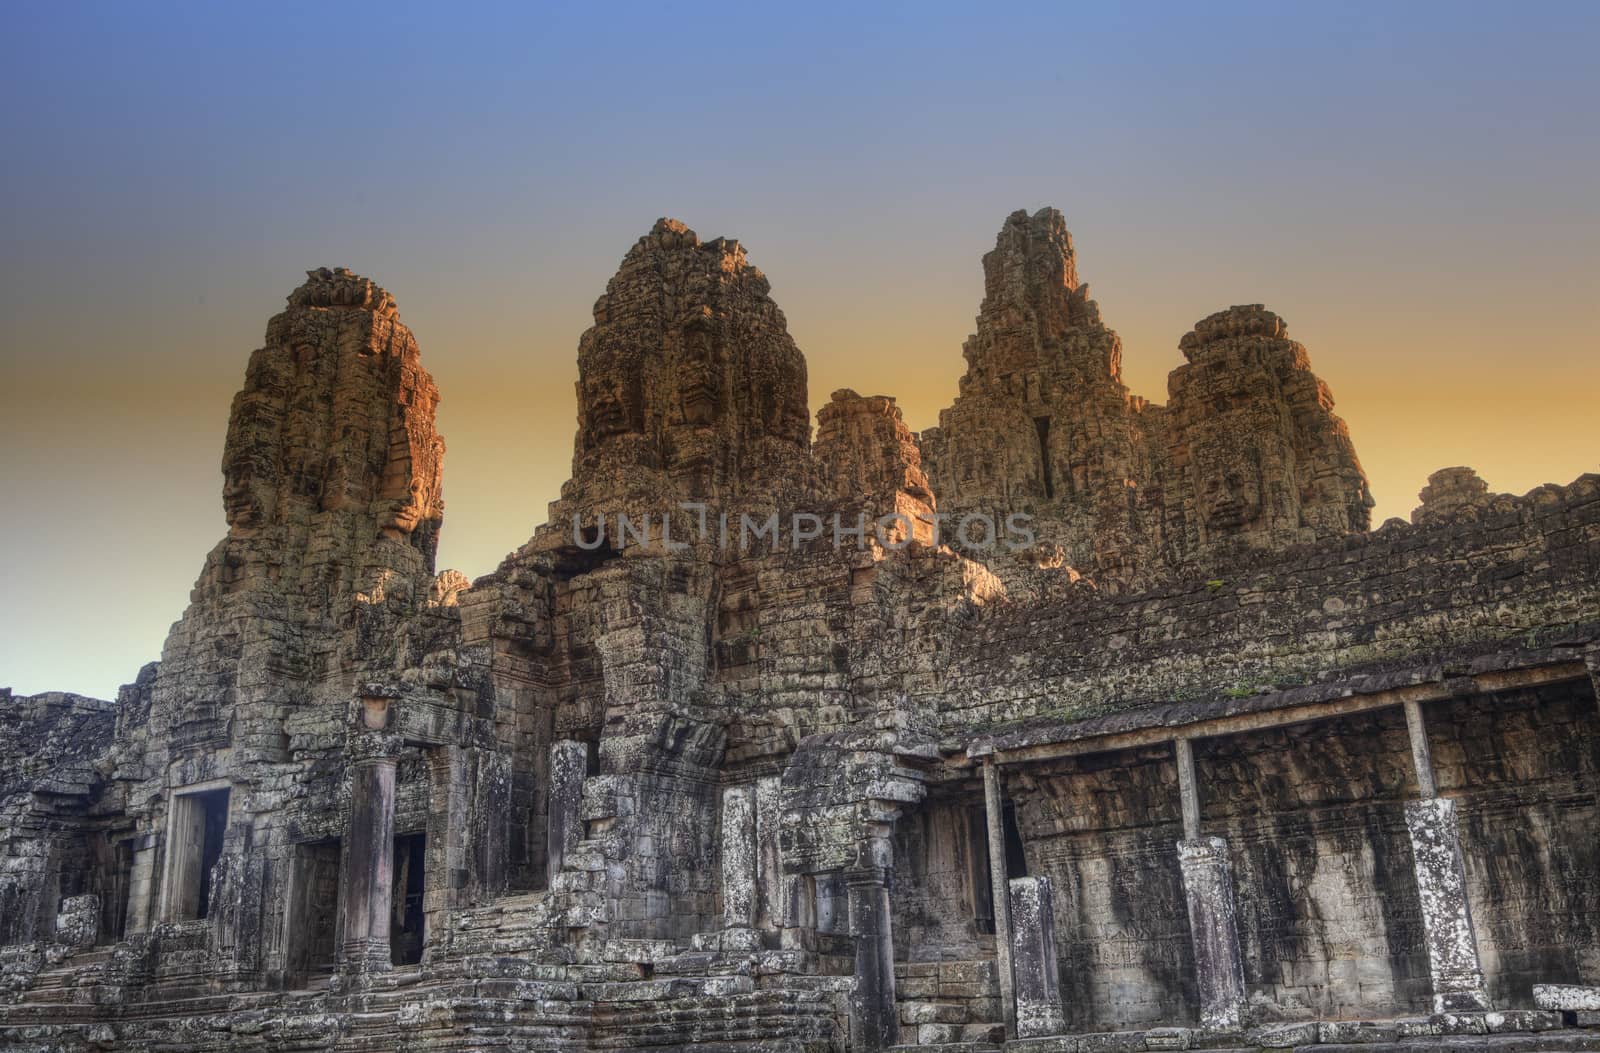 Bayon temple at sunset in Angkor Cambodia by ldambies